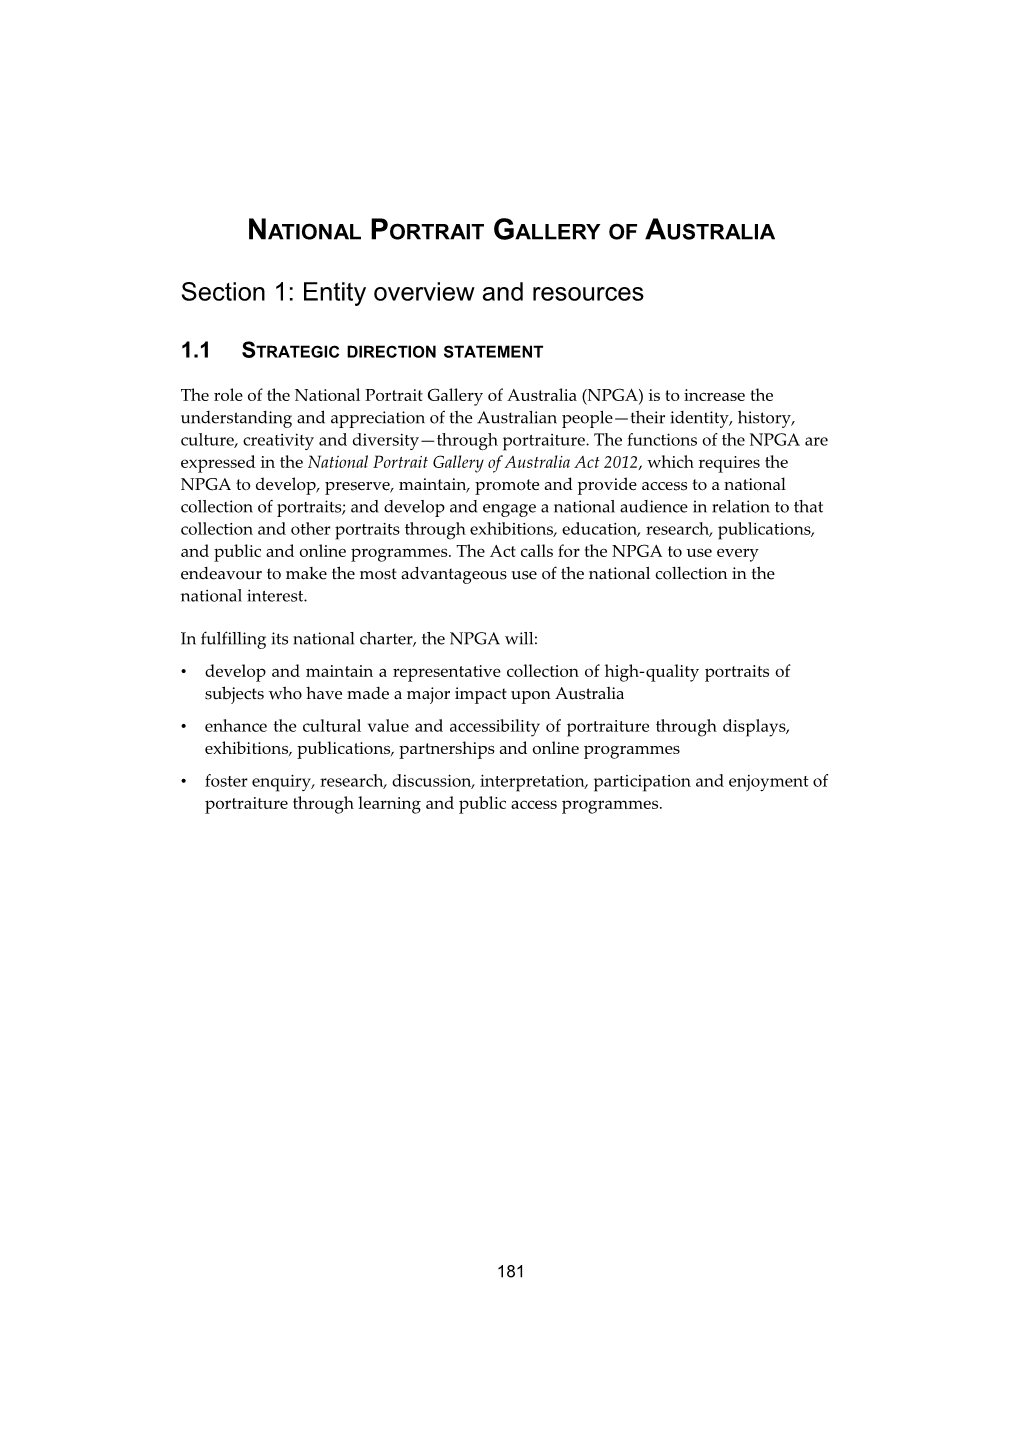 Portfolio Budget Statements - NATIONAL PORTRAIT GALLERY of AUSTRALIA